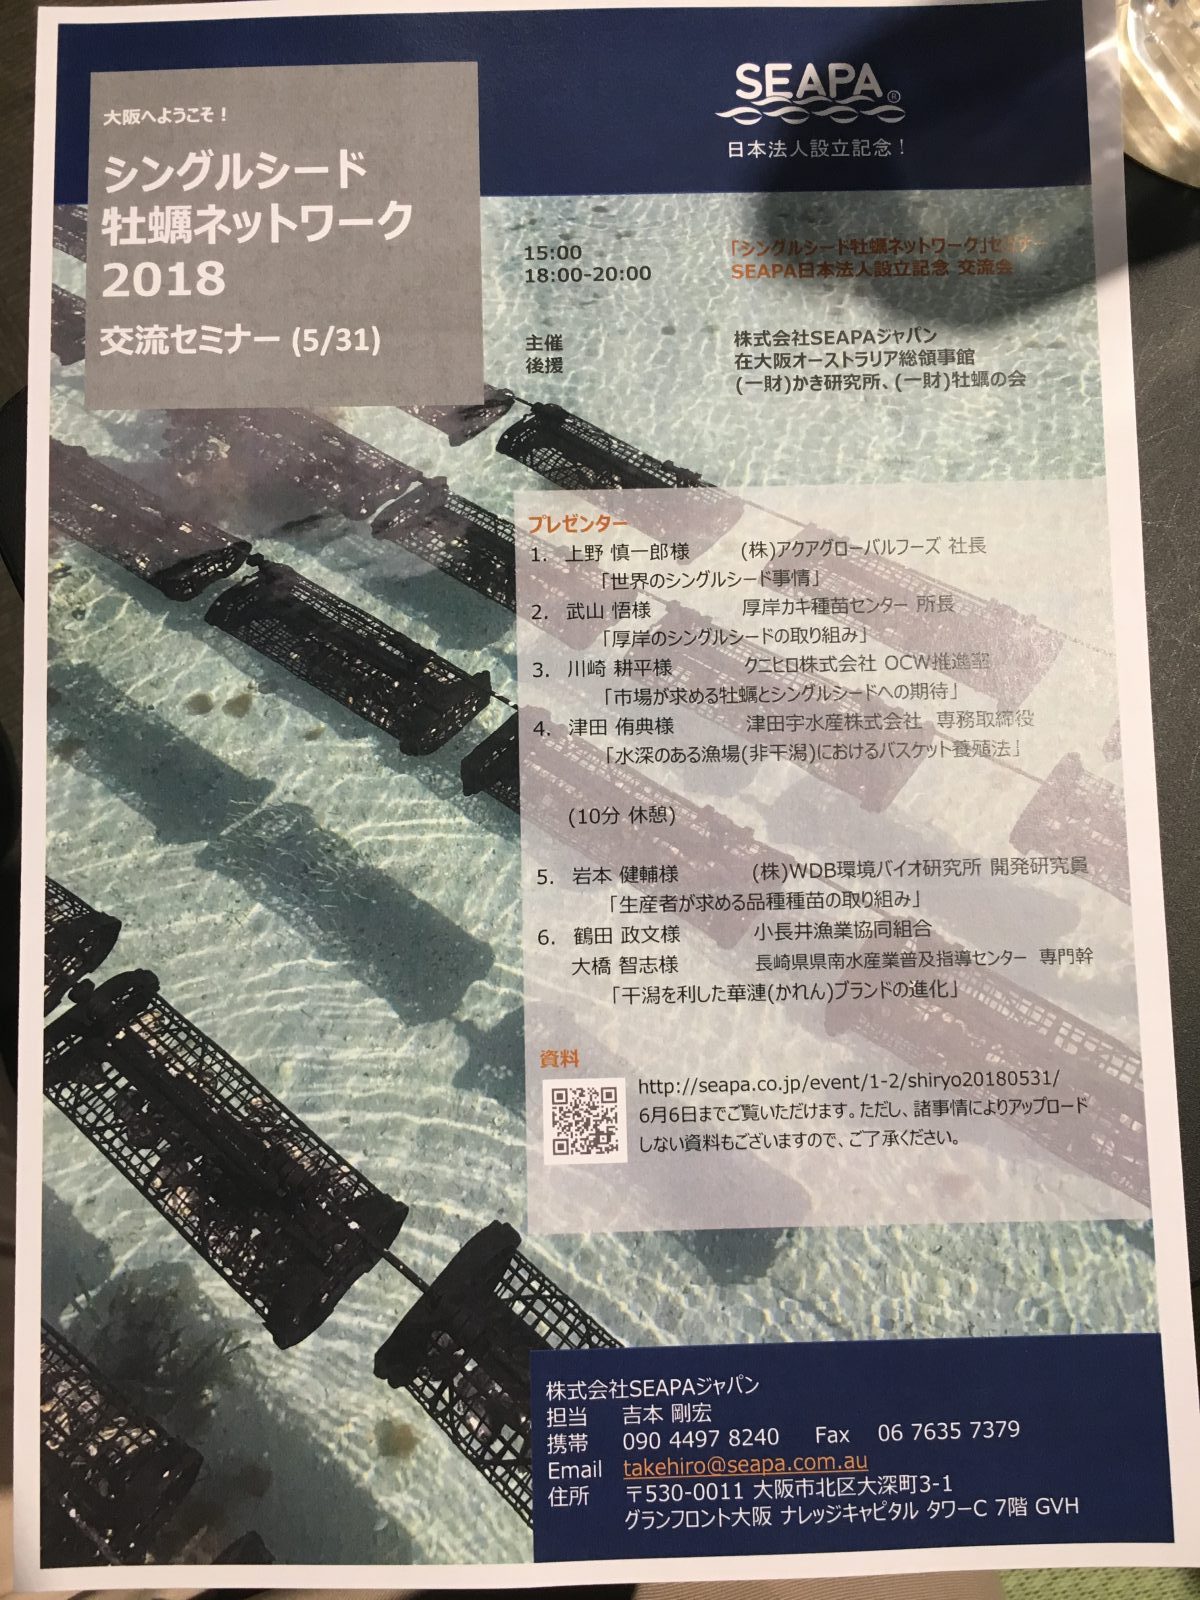 2018 SEAPAジャパン設立記念　「シングルシード牡蠣ネットワーク」交流セミナー